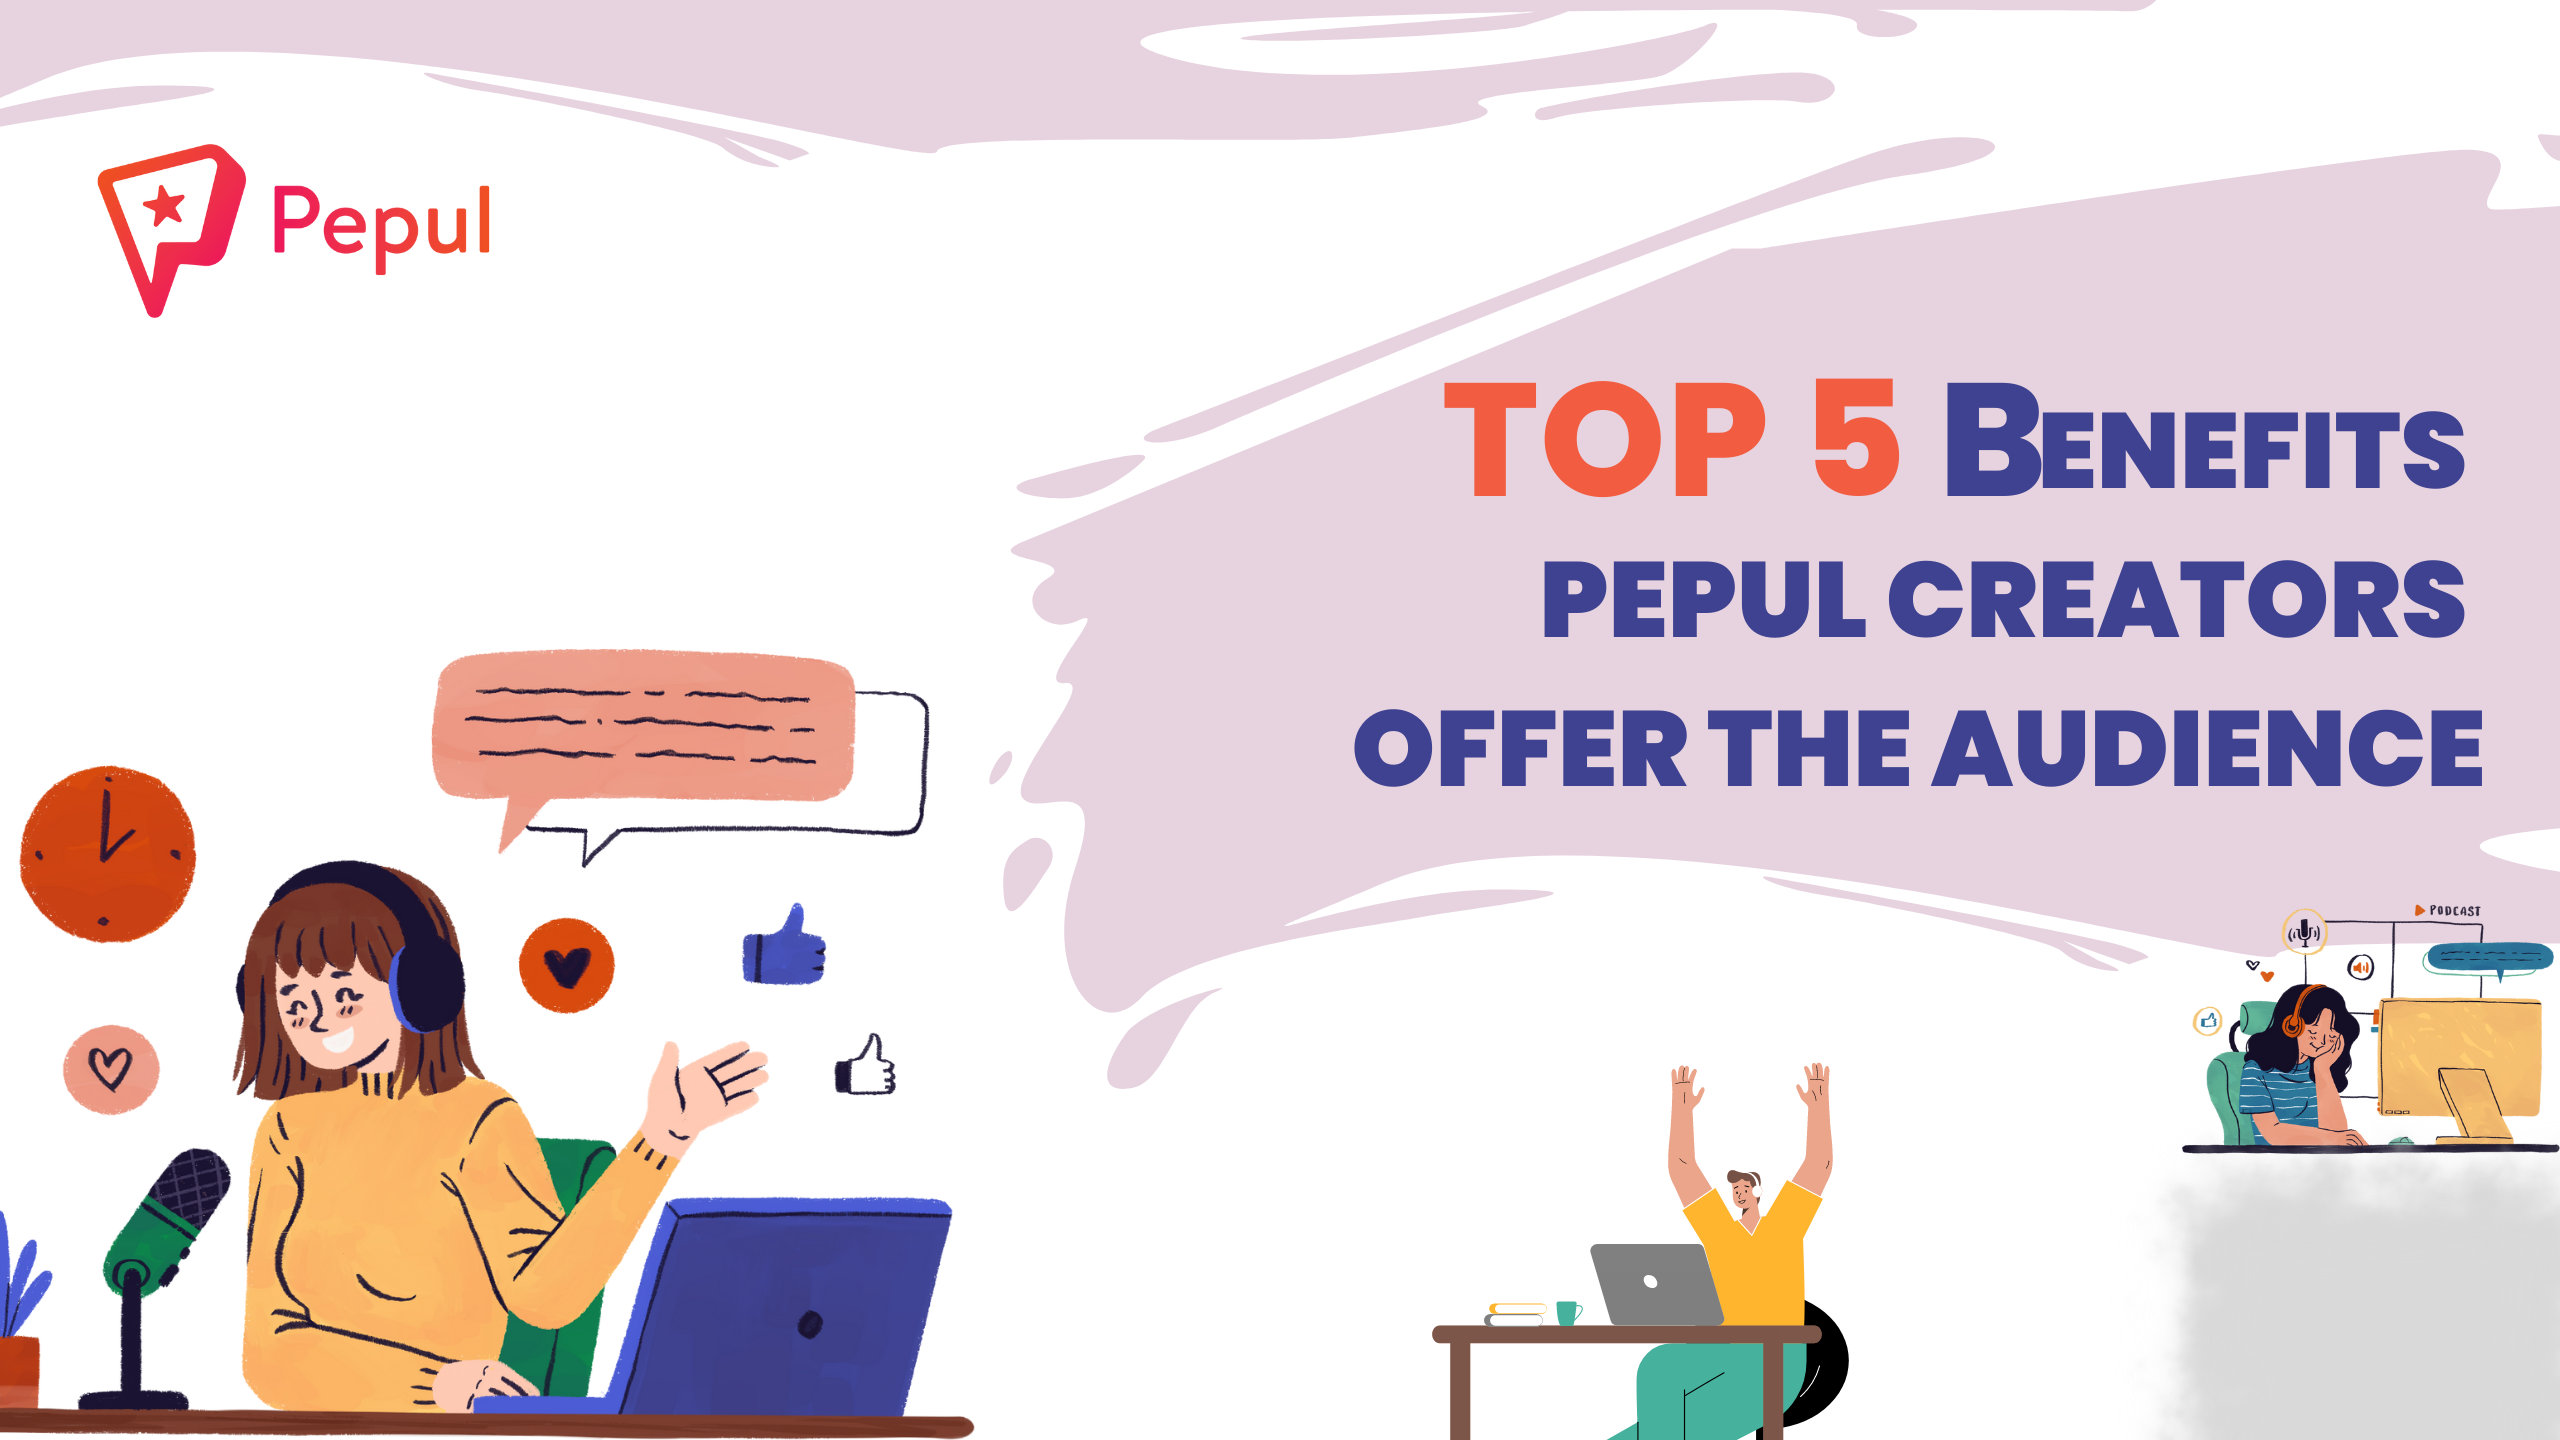 Top 5 Benefits that Pepul Creators Offer Their Audience